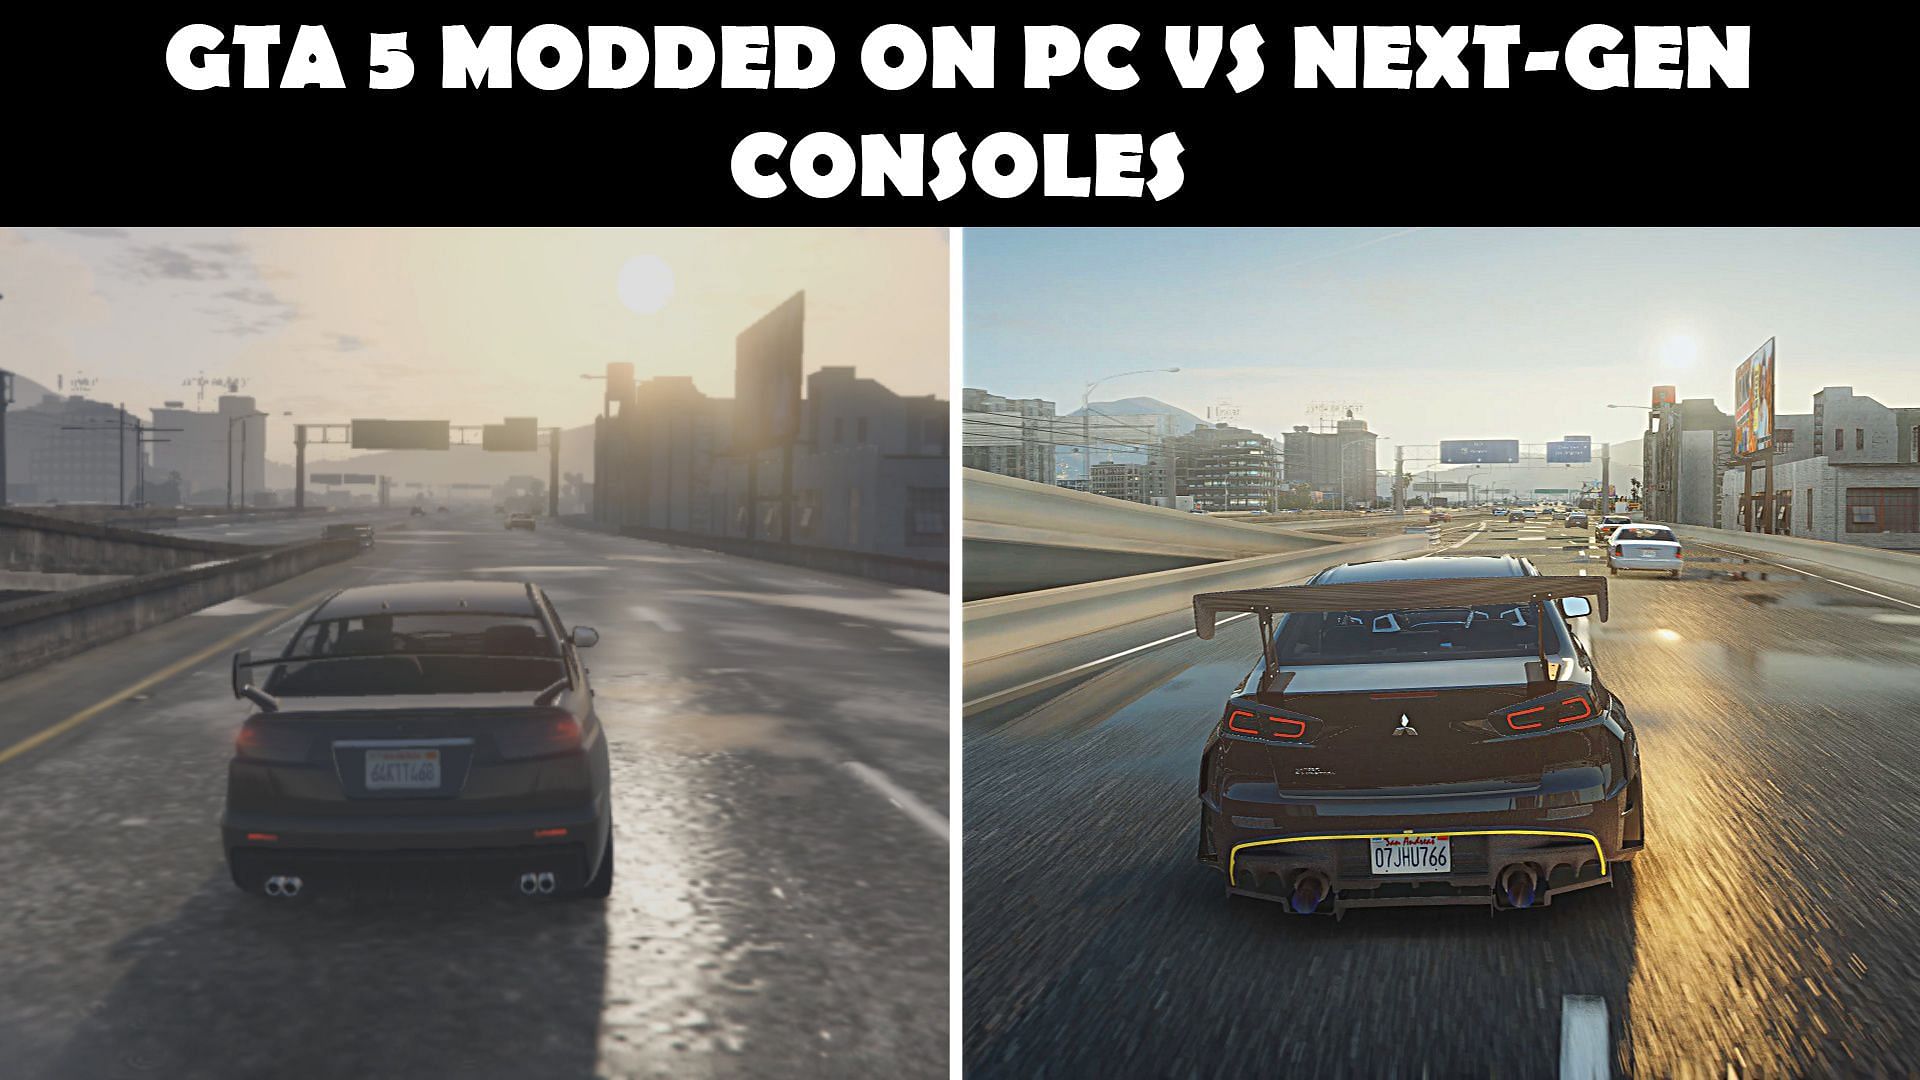 A modded GTA 5 on PC looks better than E&E